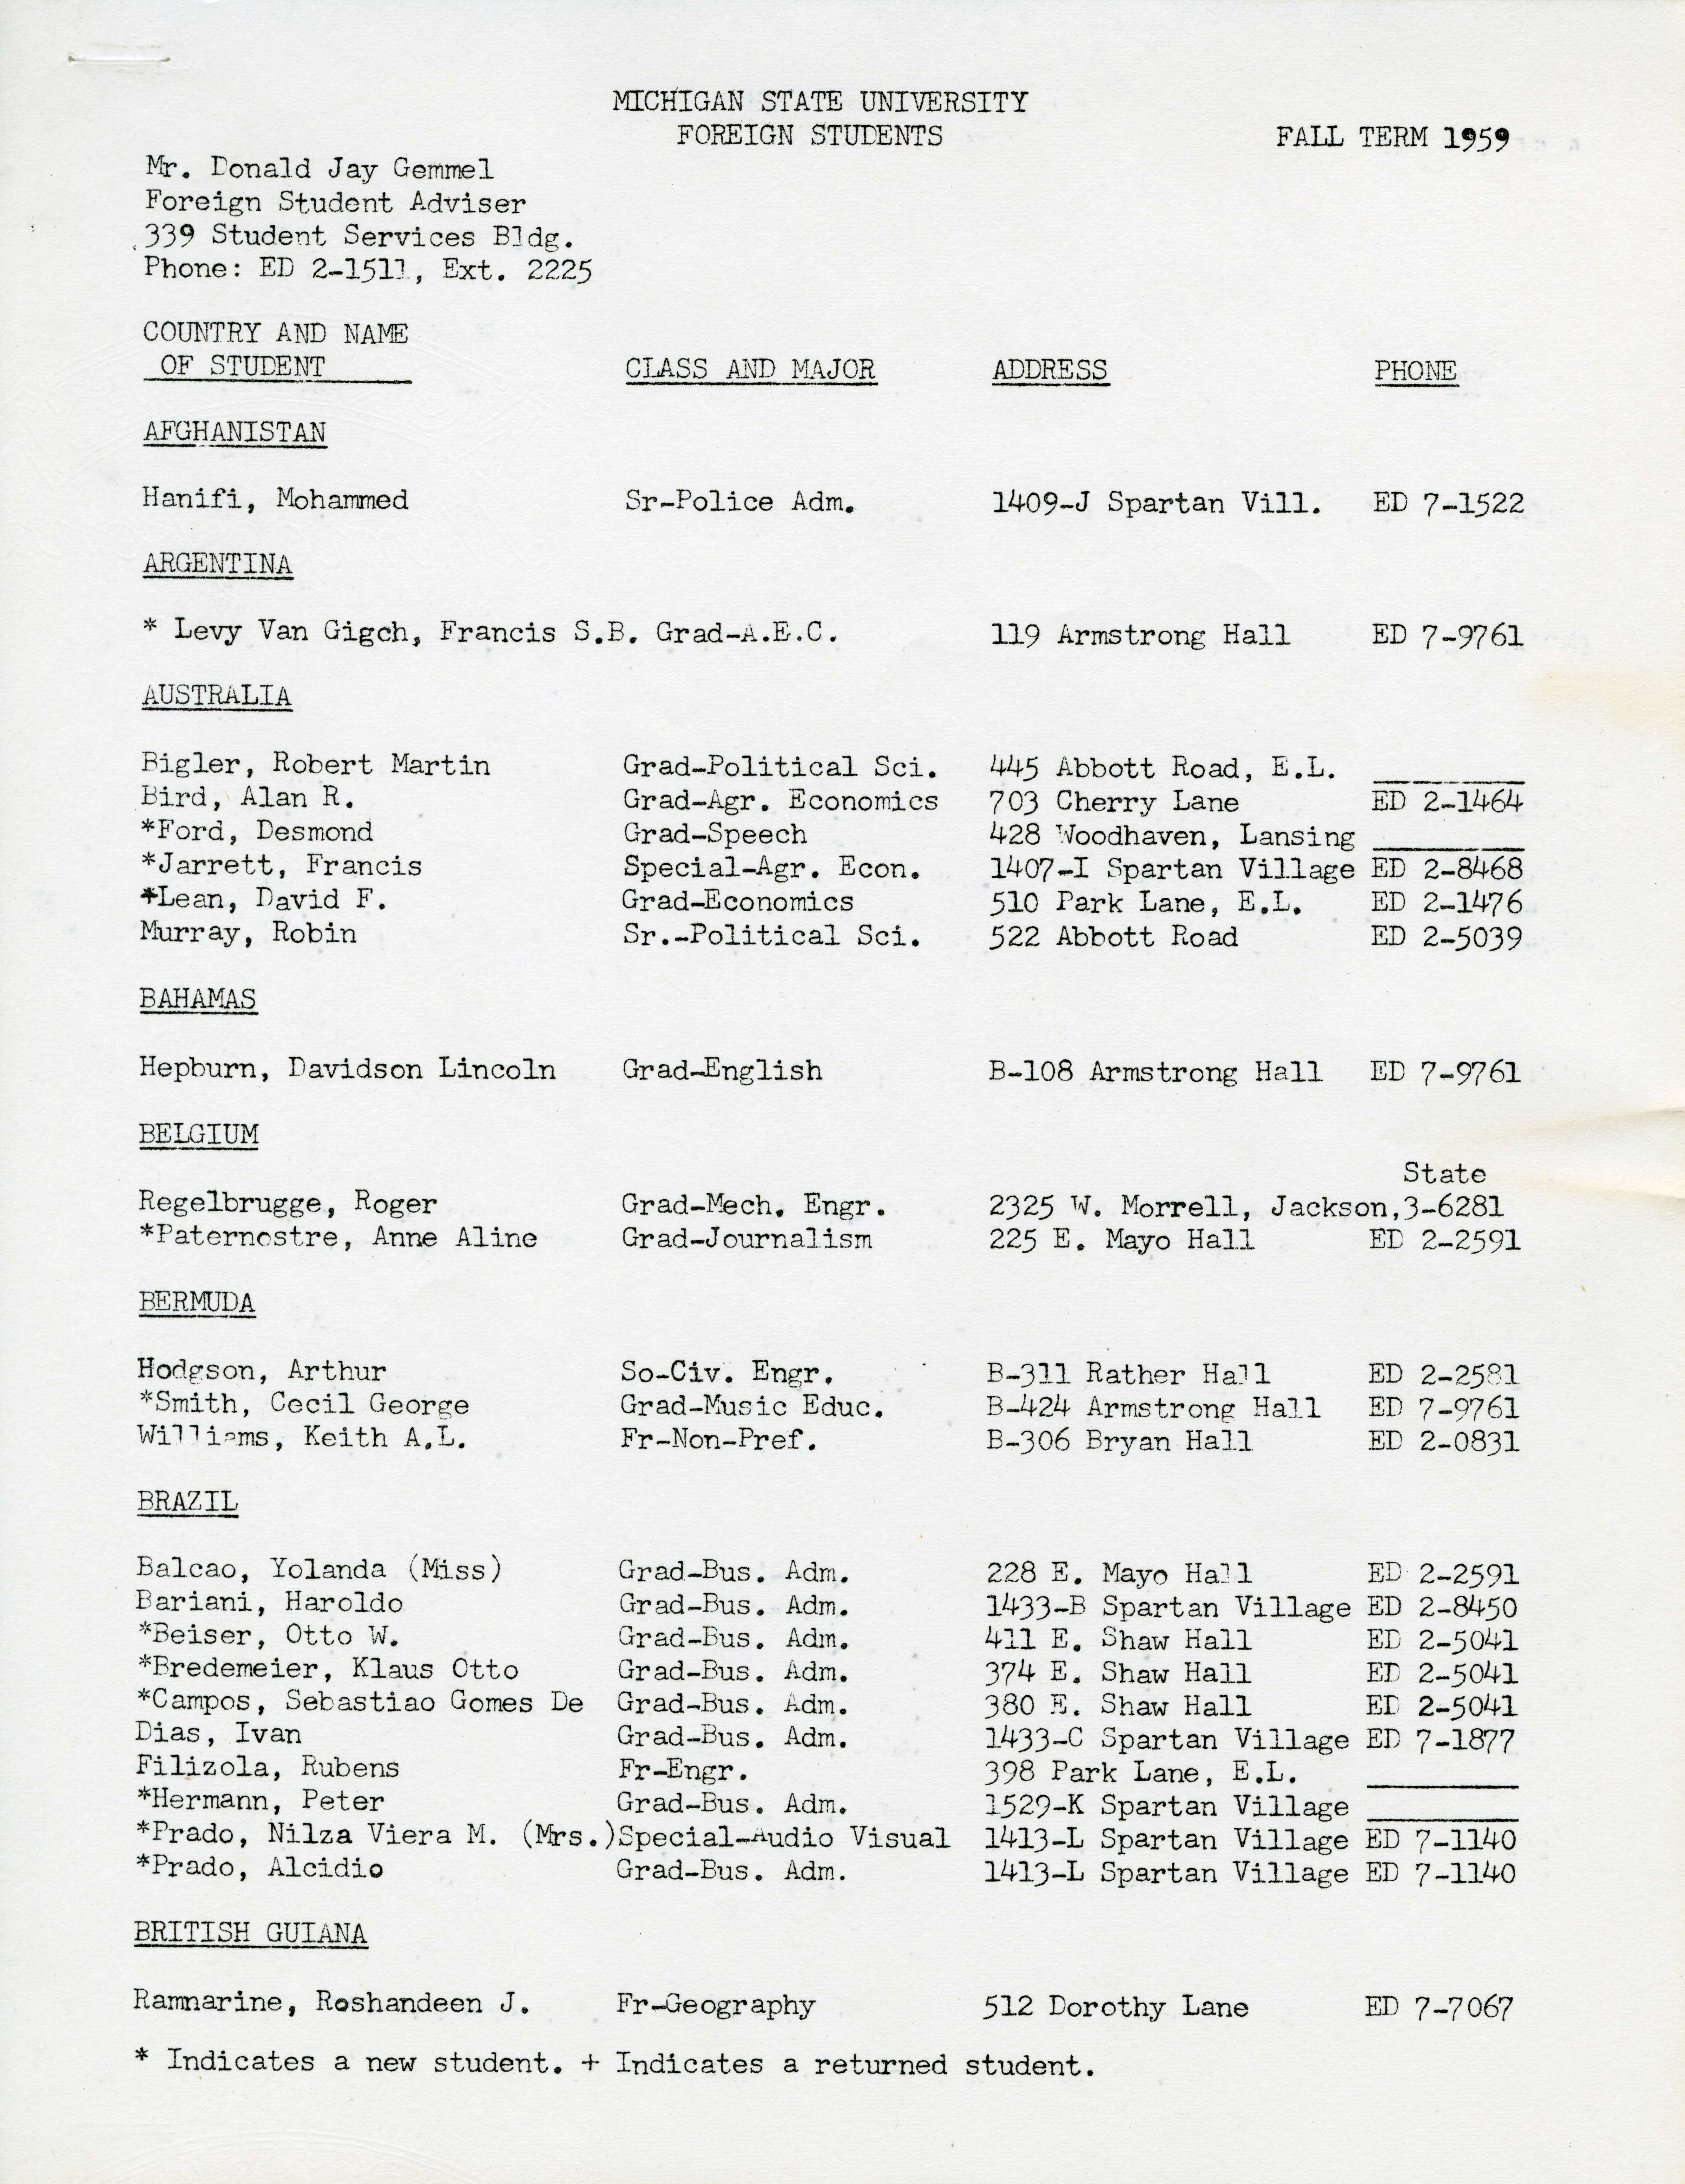 1959 (Fall) International Student Directory